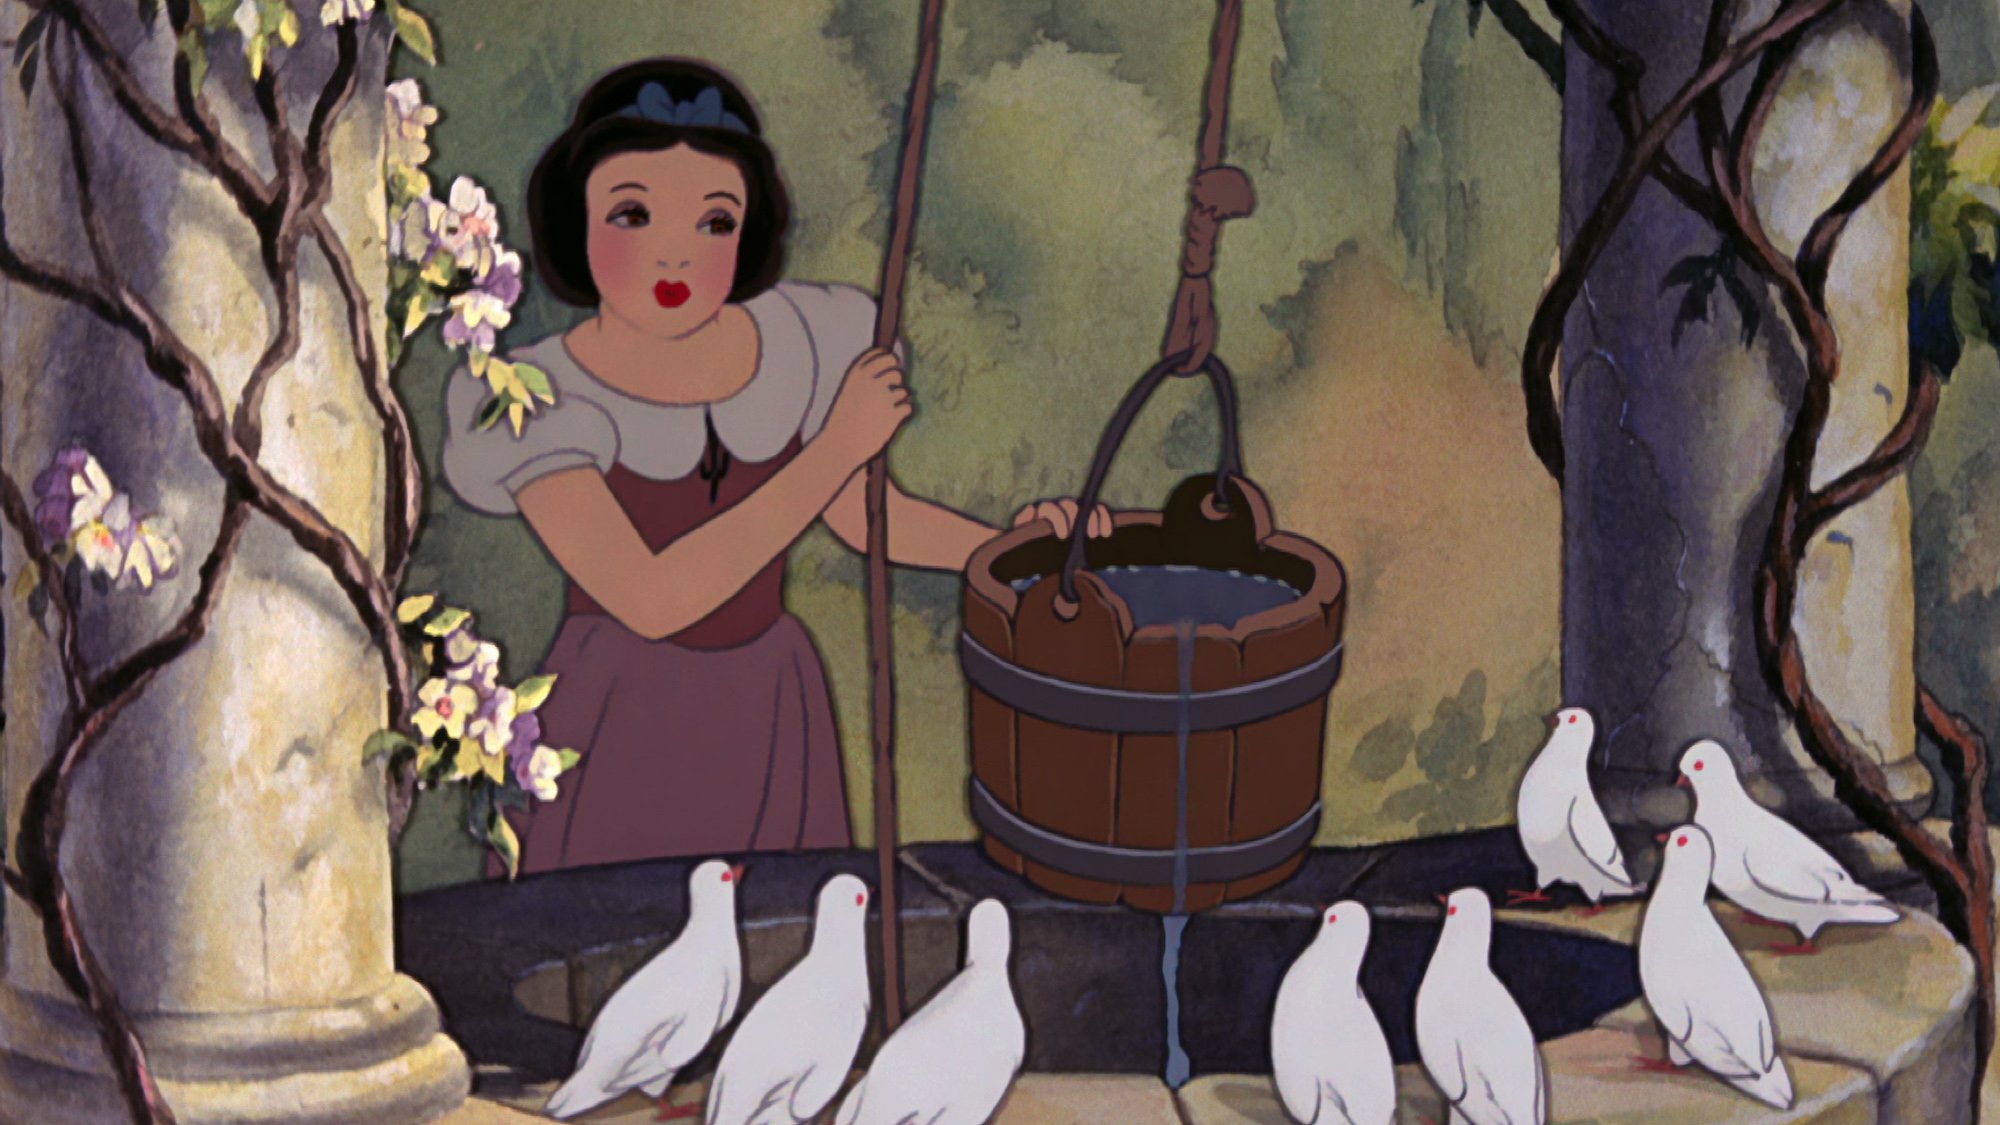 Snow White singing to birds